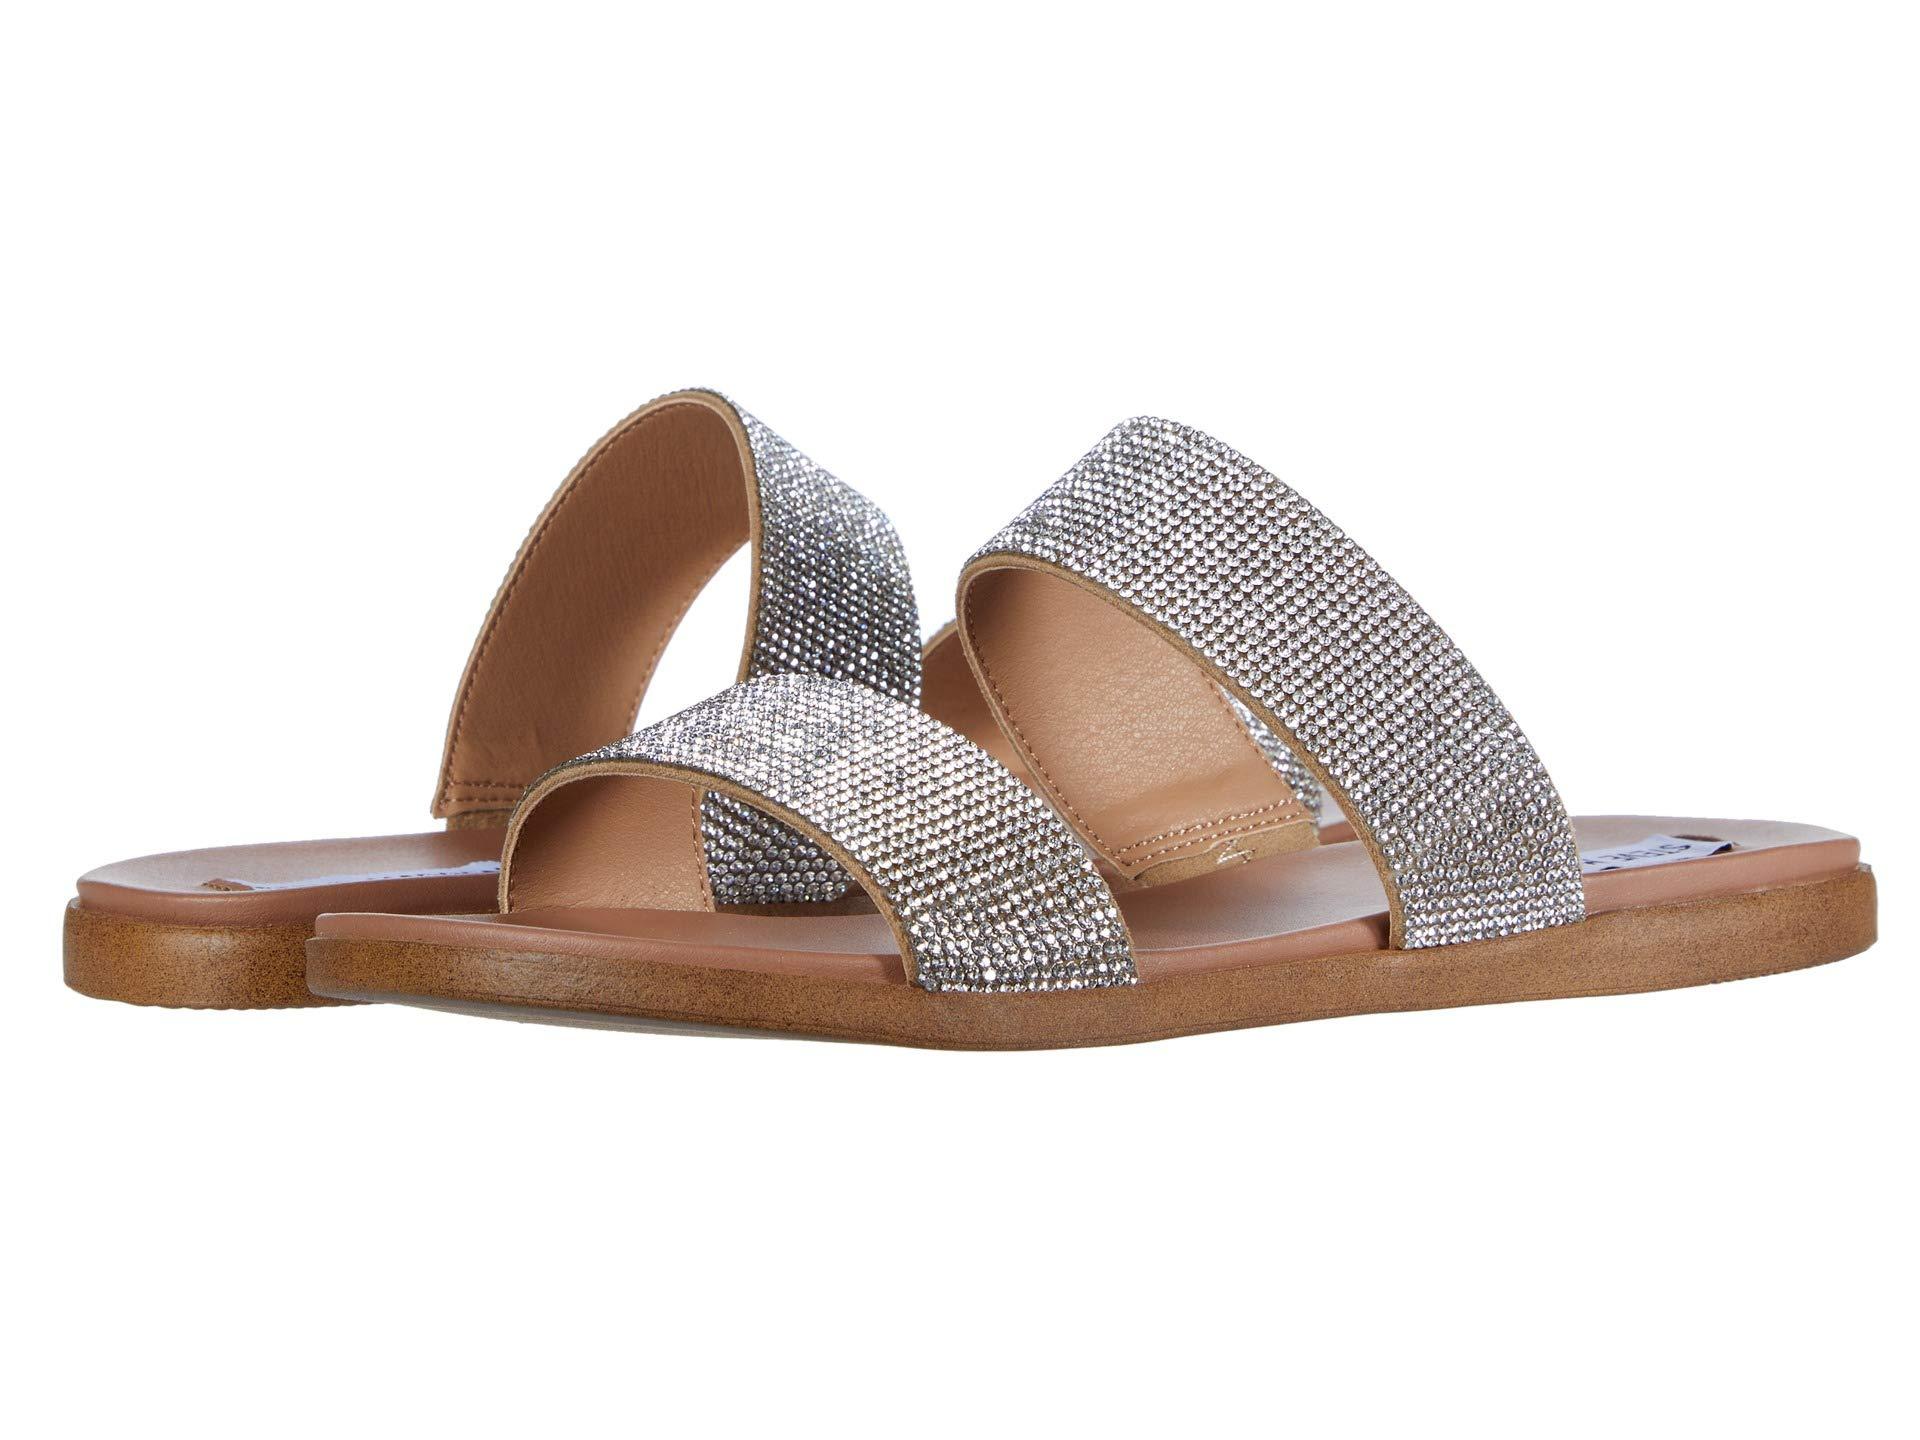 Steve Madden Dual-r Flat Sandal in Metallic | Lyst